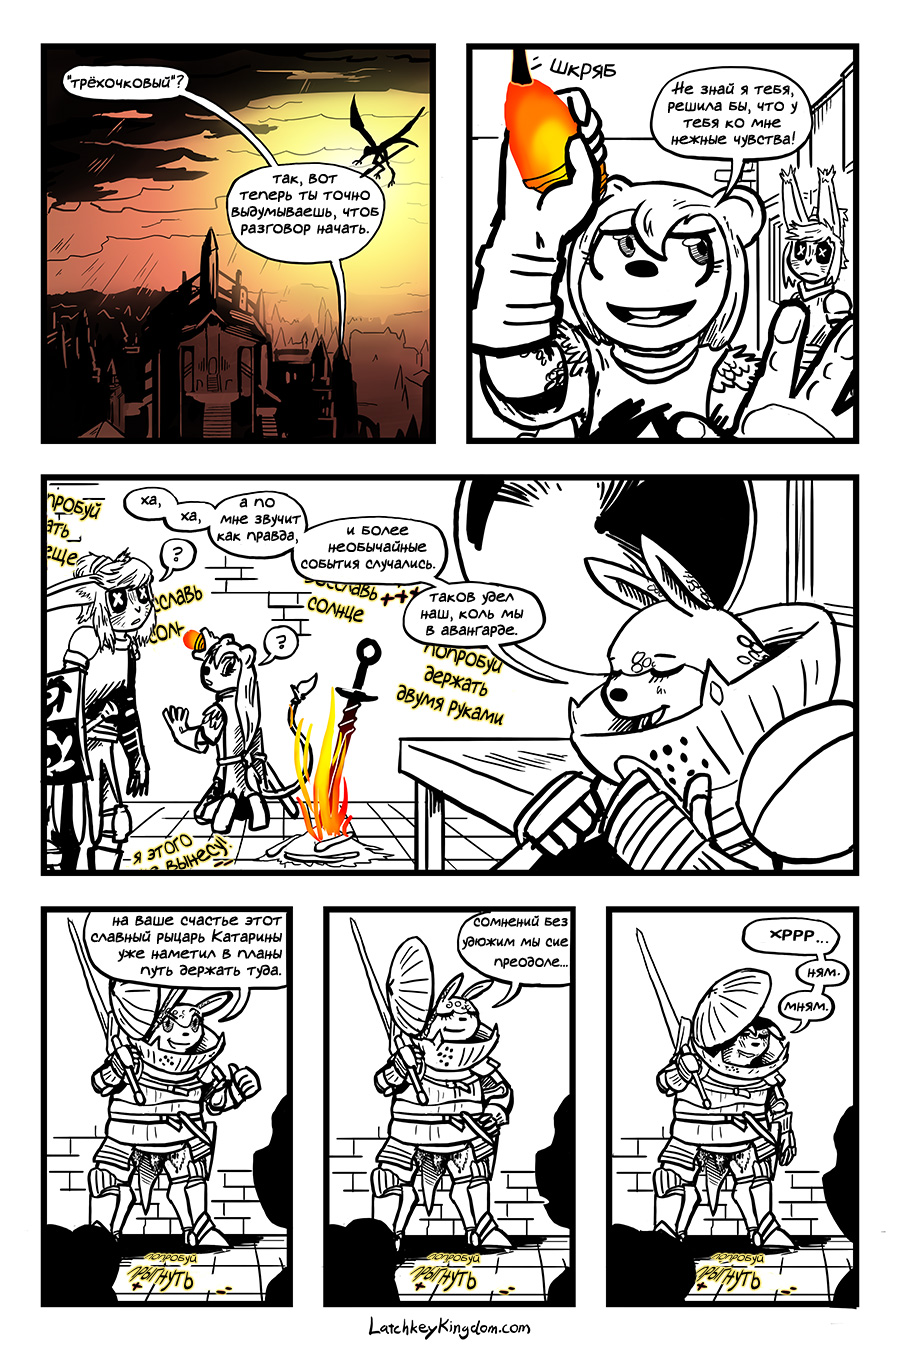 Комикс Беспризорное Царство [Latchkey Kingdom]: выпуск №115